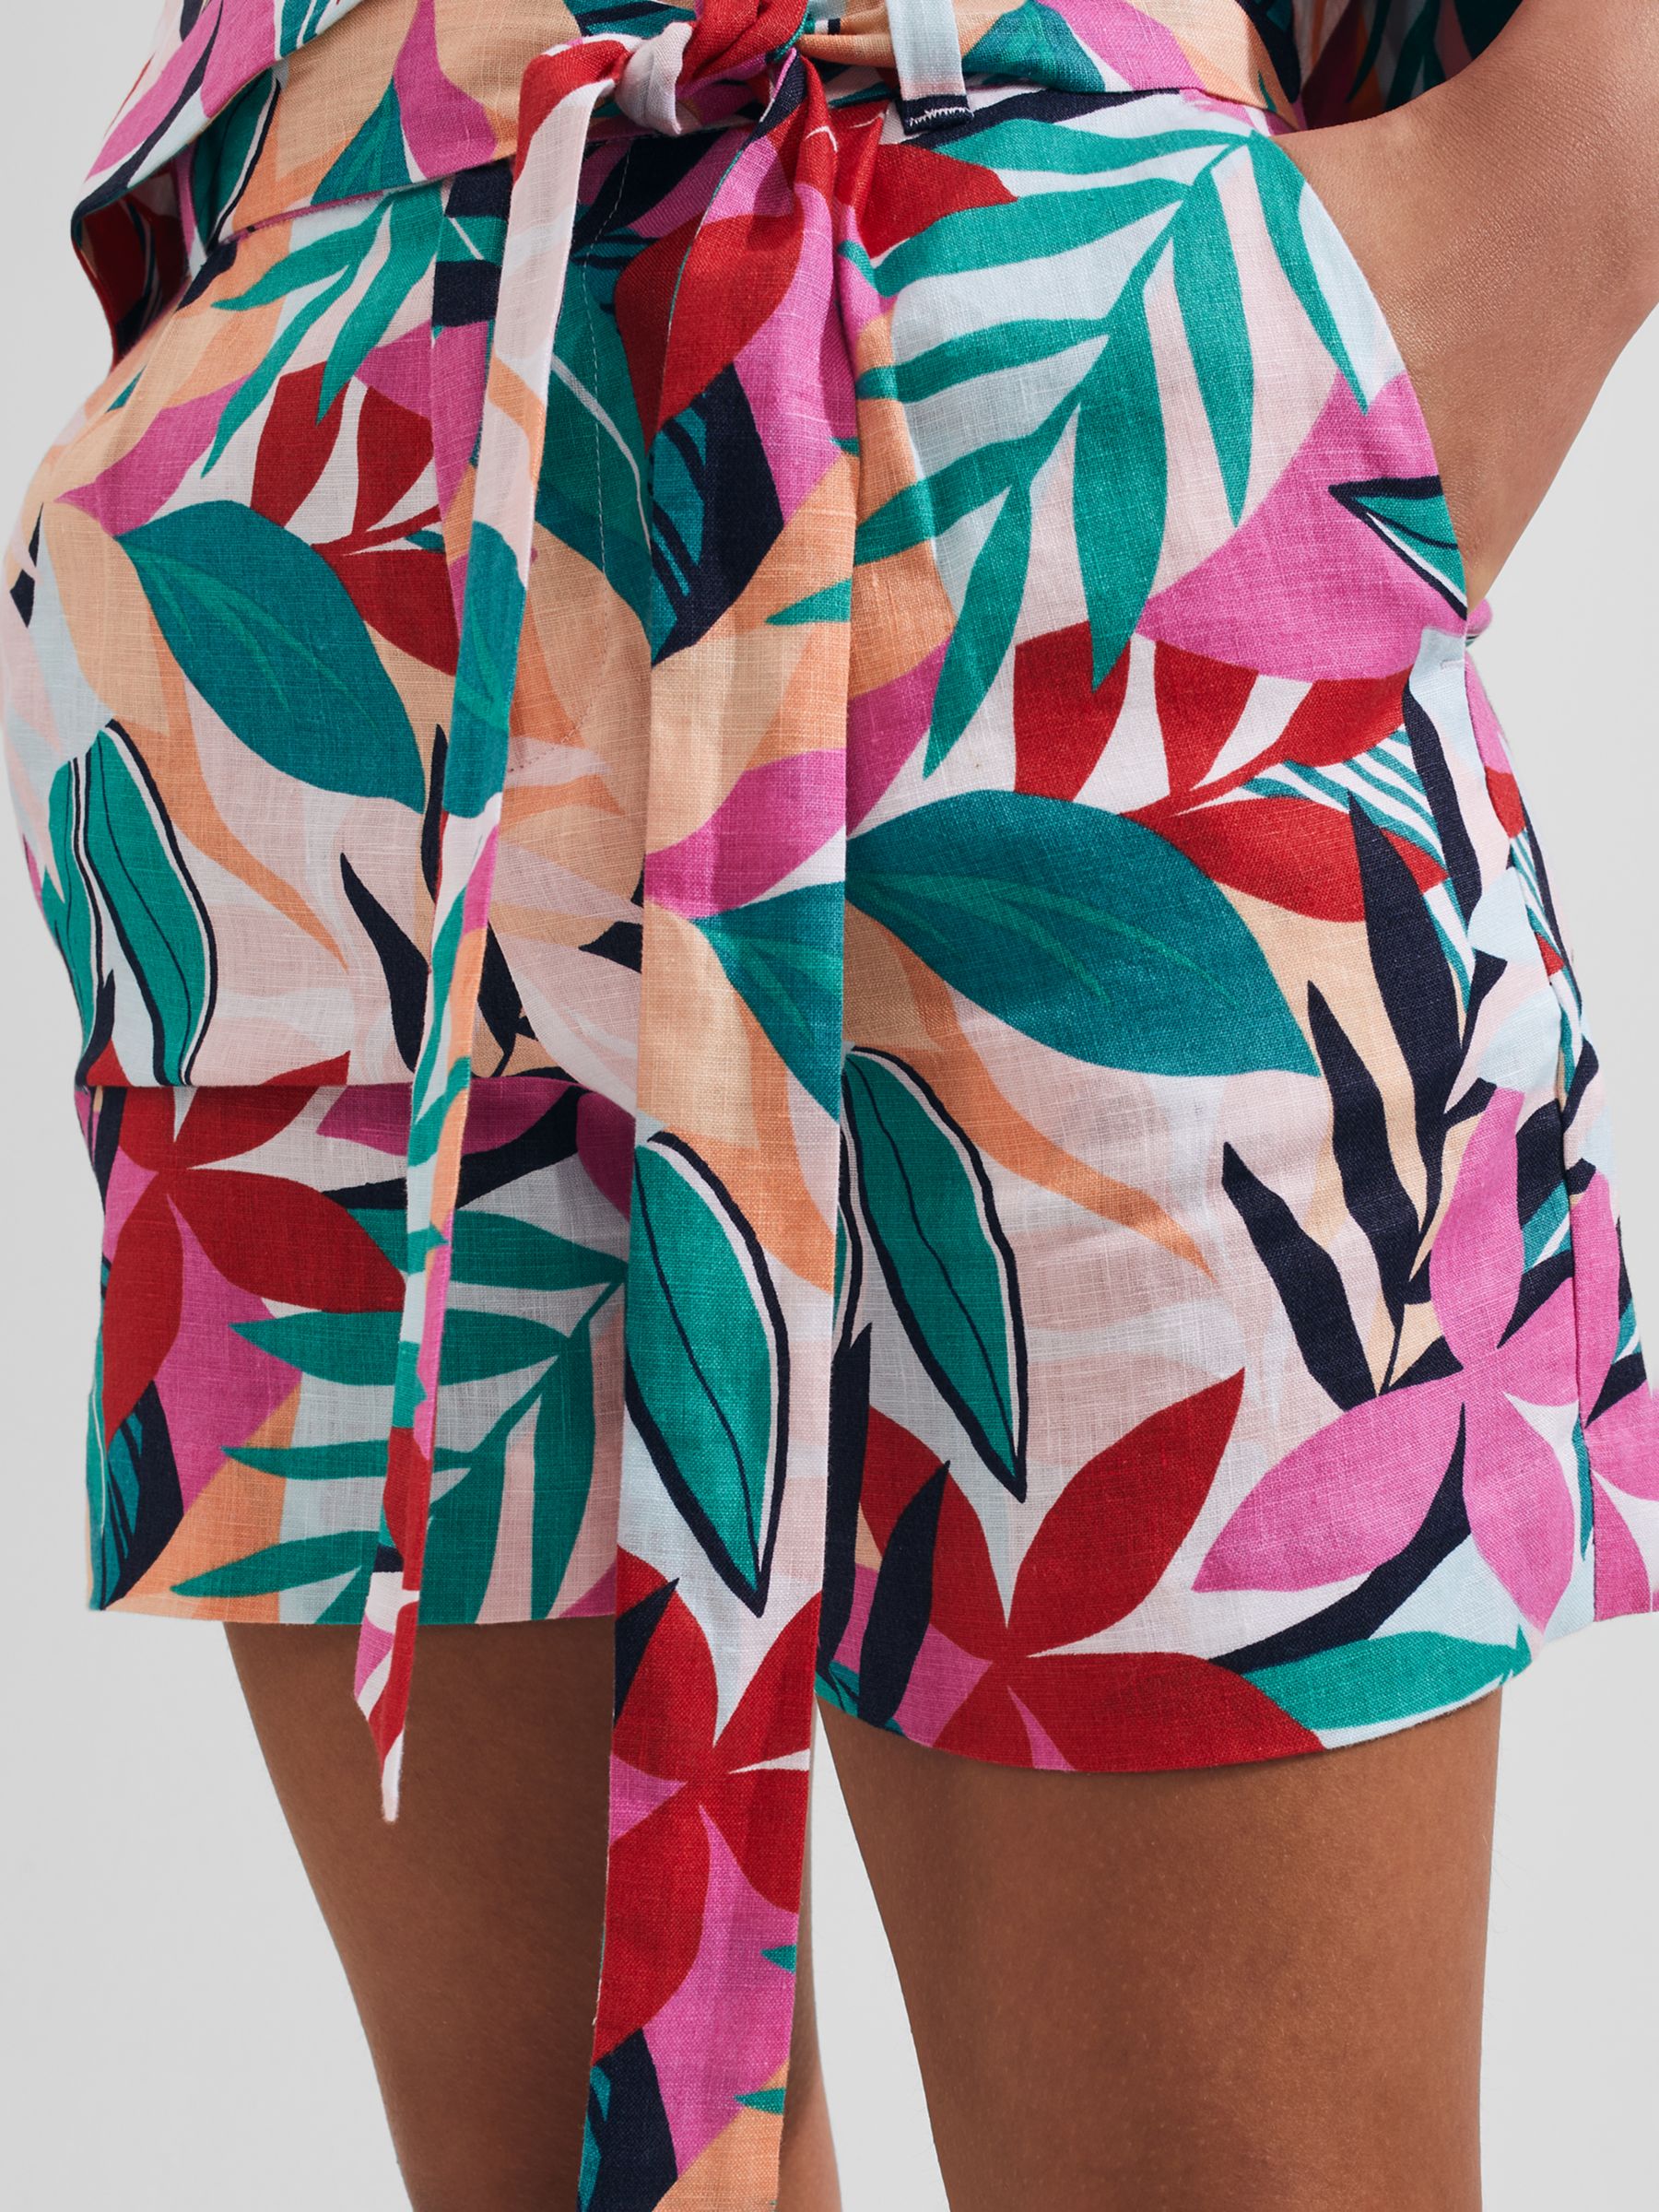 Buy Hobbs Christie Floral Print Linen Shorts, Multi Online at johnlewis.com